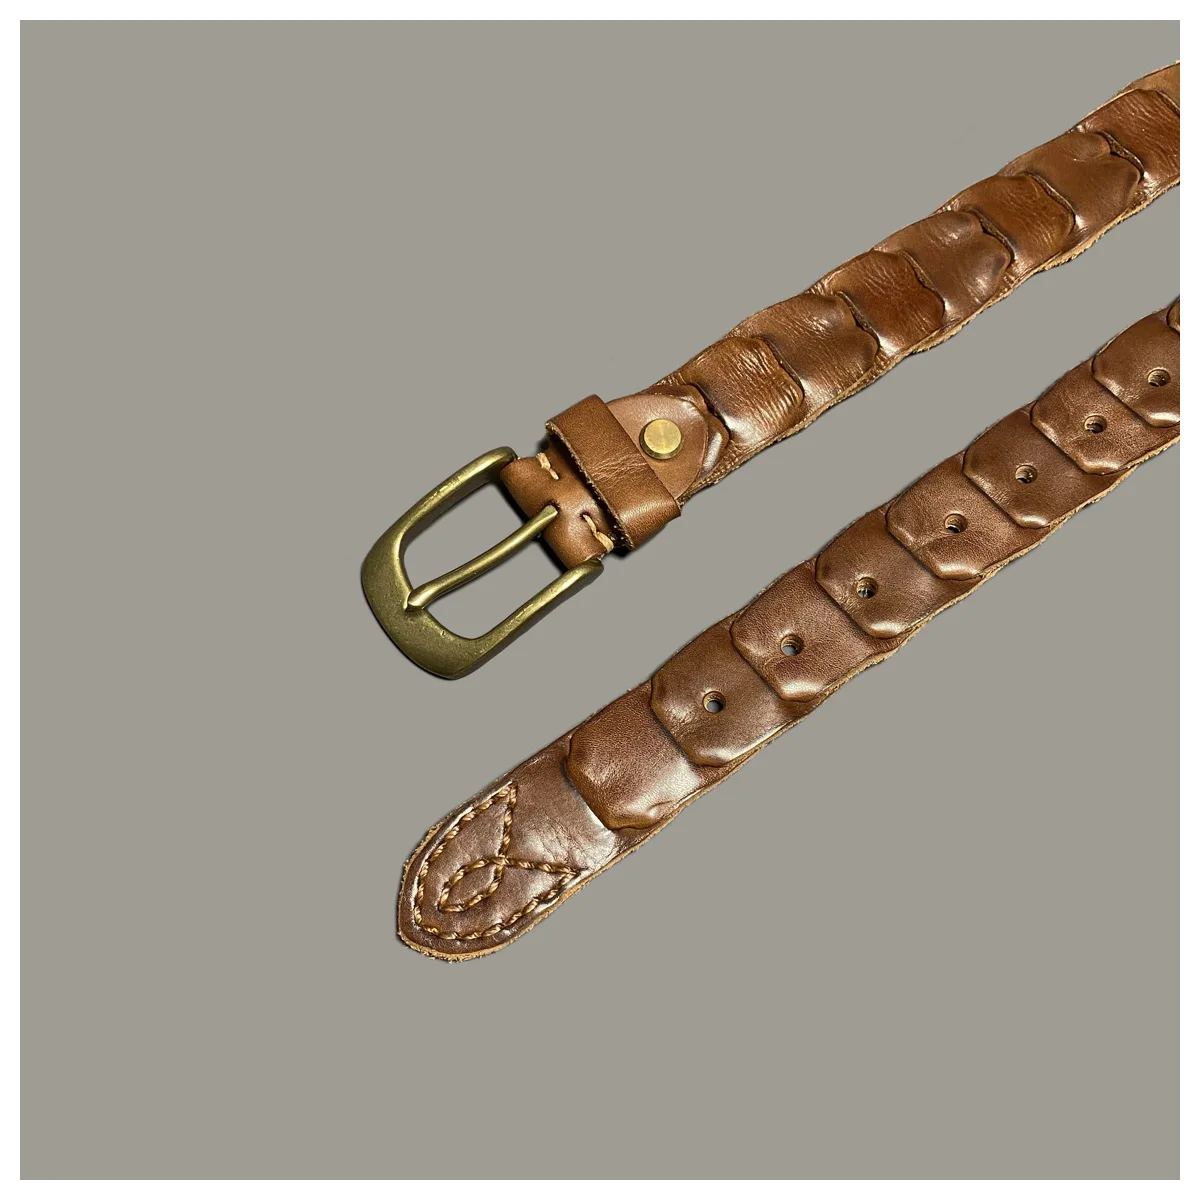 Japanese complex handmade top layer cowhide denim casual belt unisex copper buckle leather retro belt brown